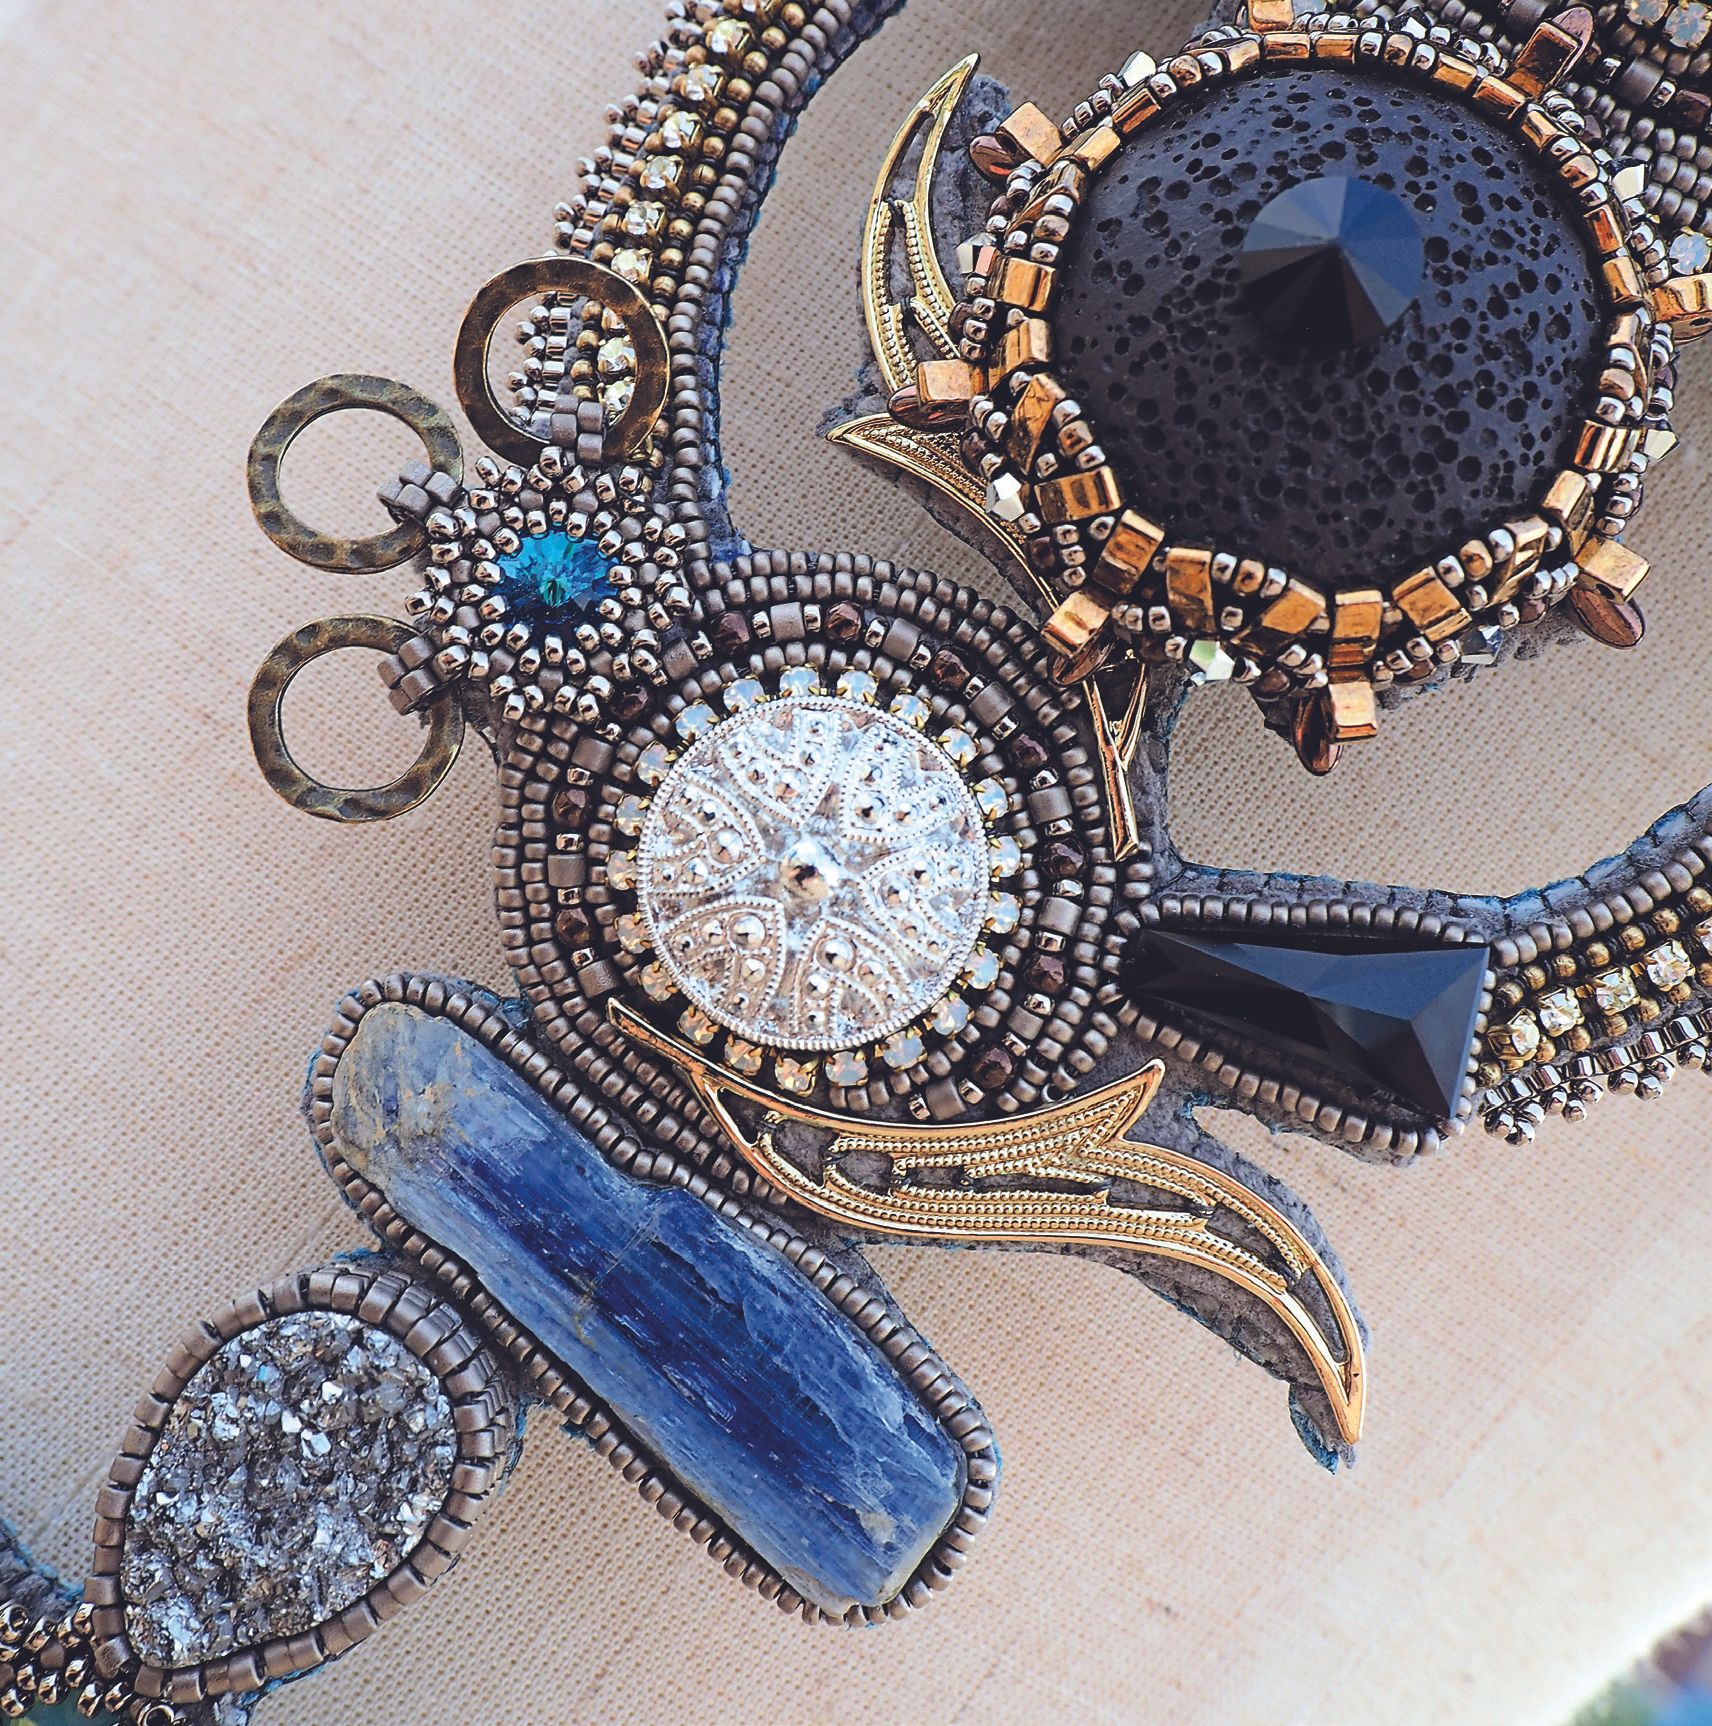 Stringing/Beading Artisan (Fashion Jewellery) – Career Pathways